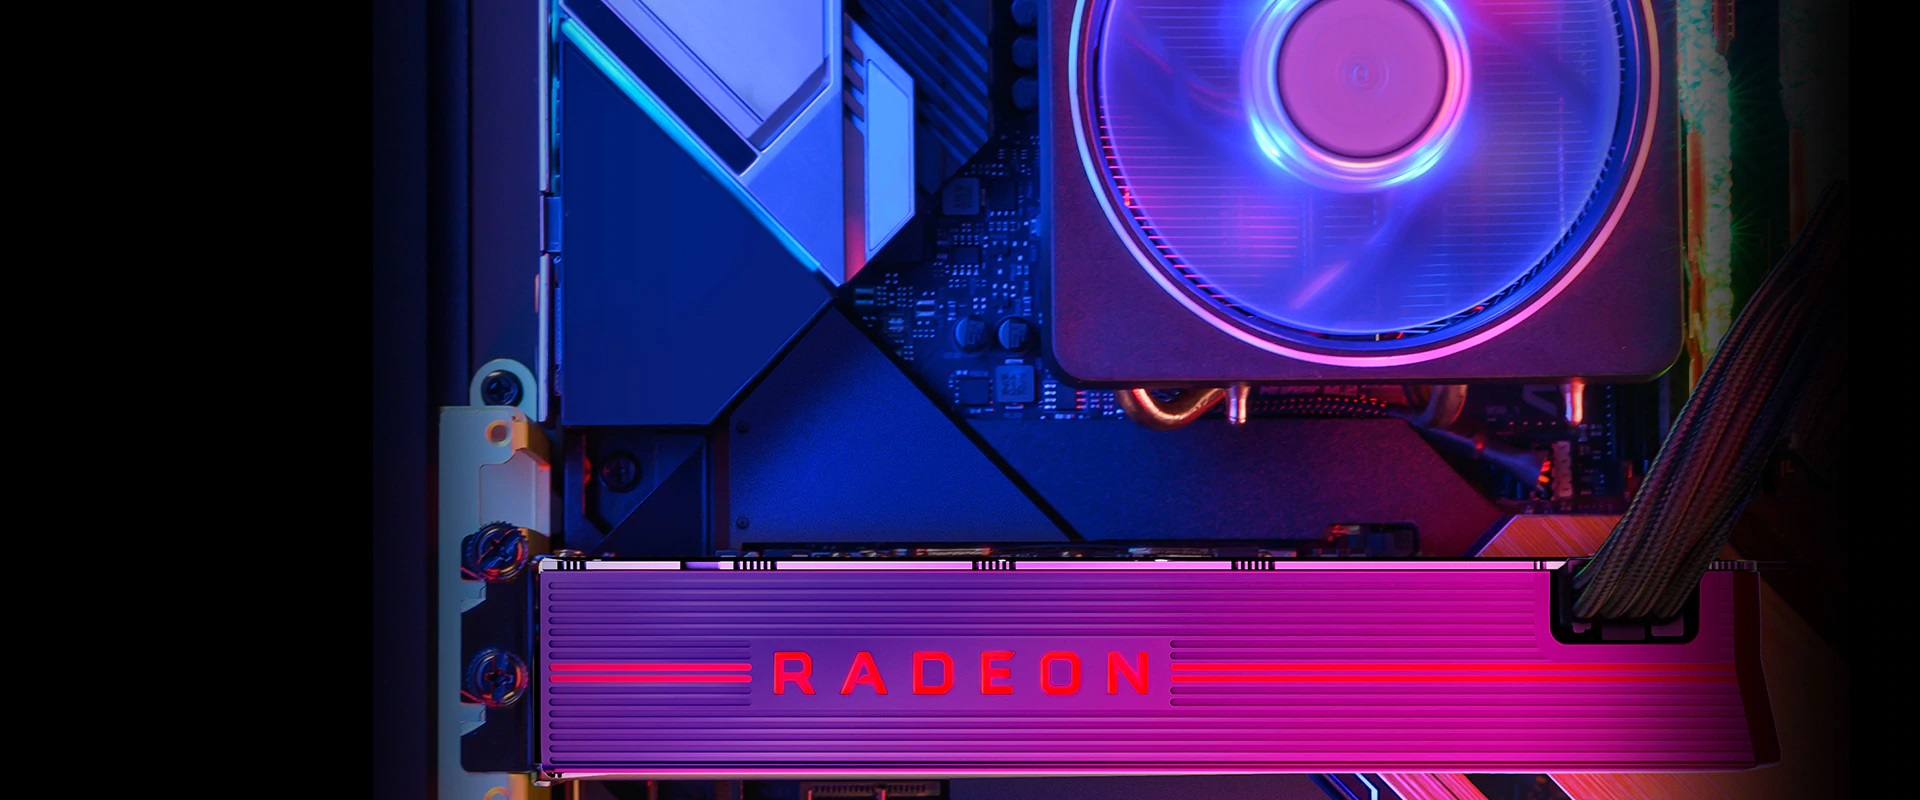 Radeon RX 5300